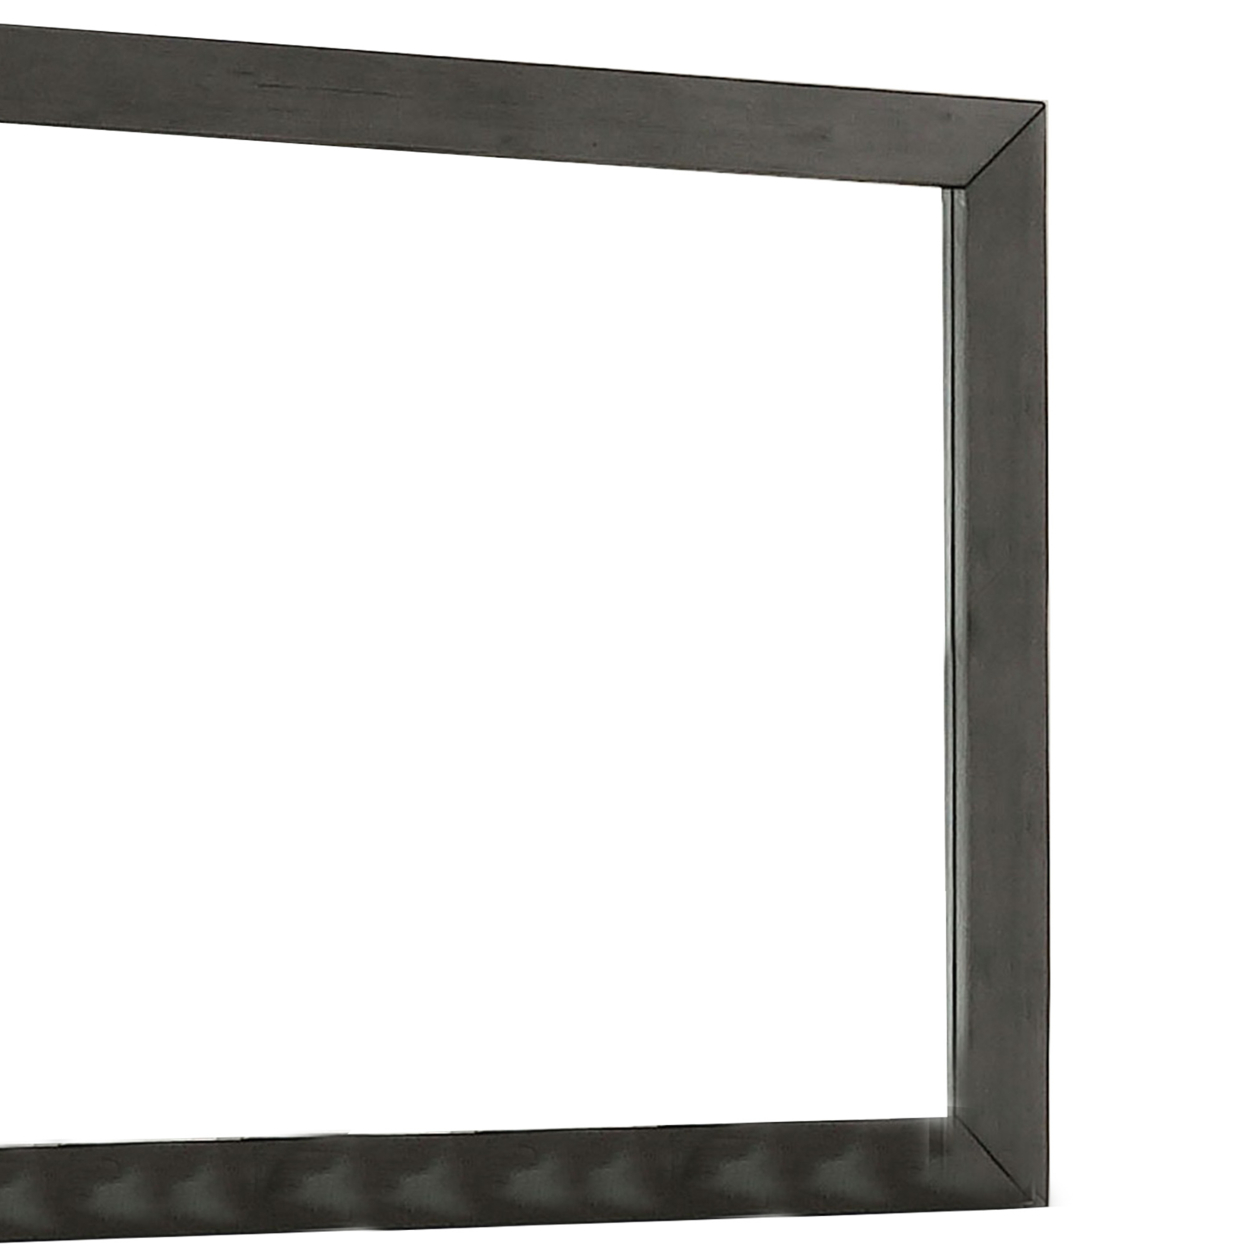 39 Inch Mirror With Rectangular Wooden Frame, Dark Gray- Saltoro Sherpi